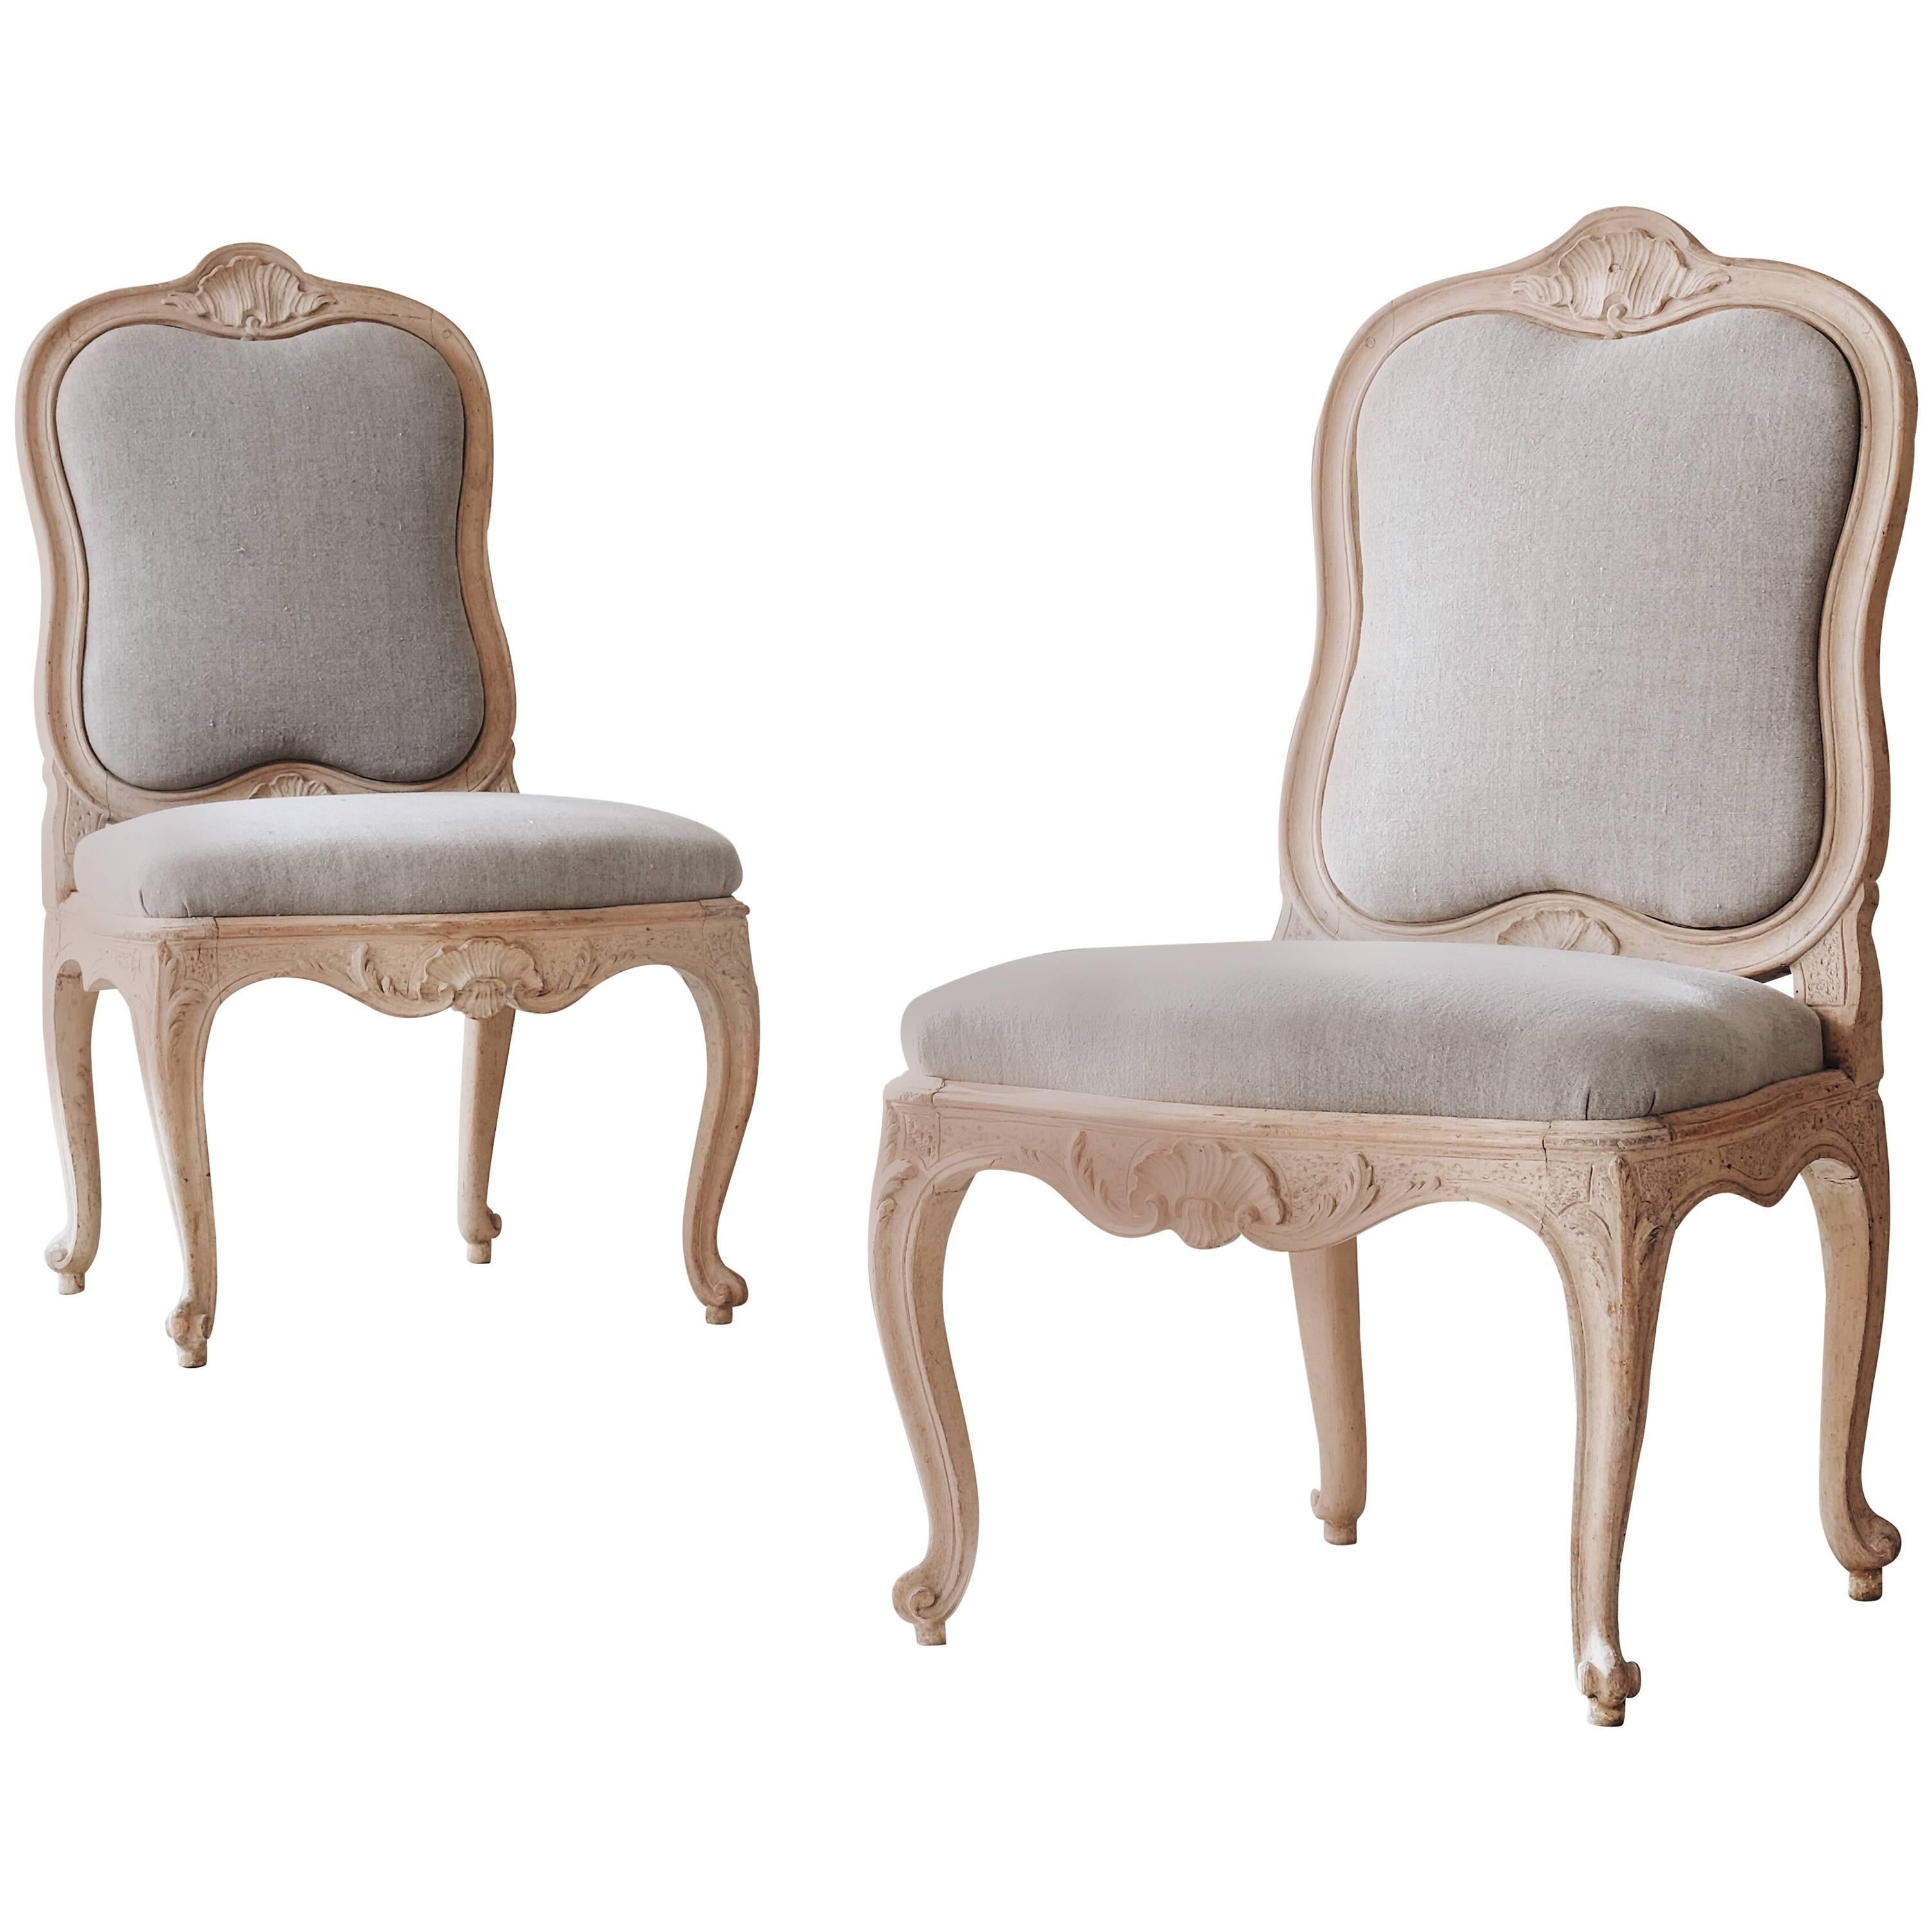 Pair of Swedish 18th Century Rococo Chairs